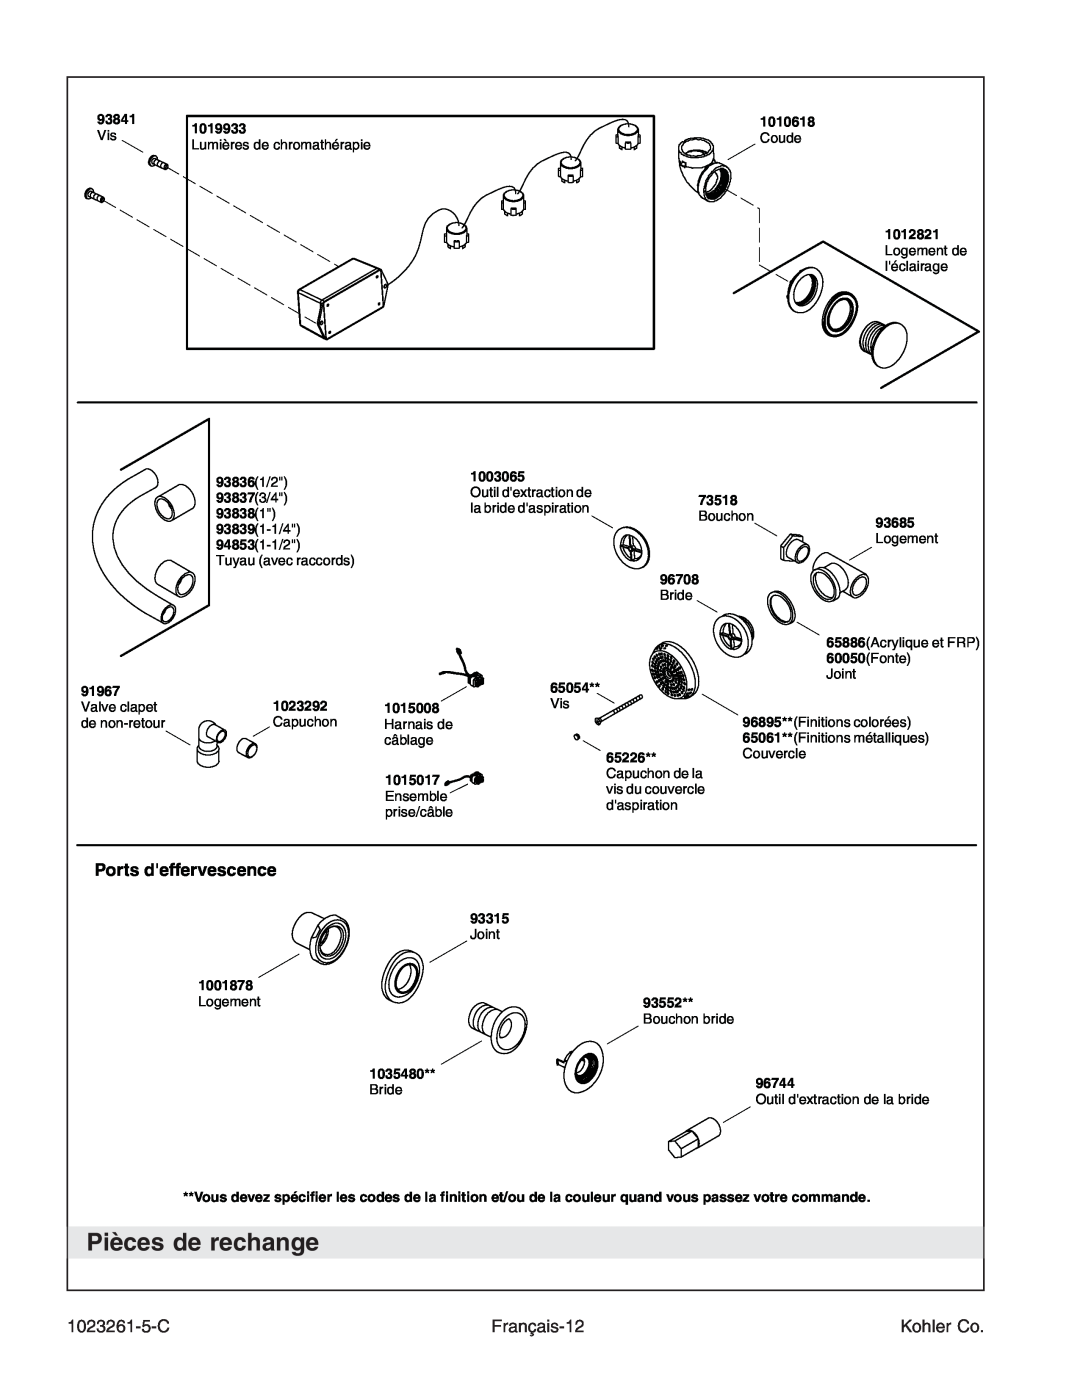 Kohler K-1110-CT manual Pièces de rechange, Ports deffervescence 